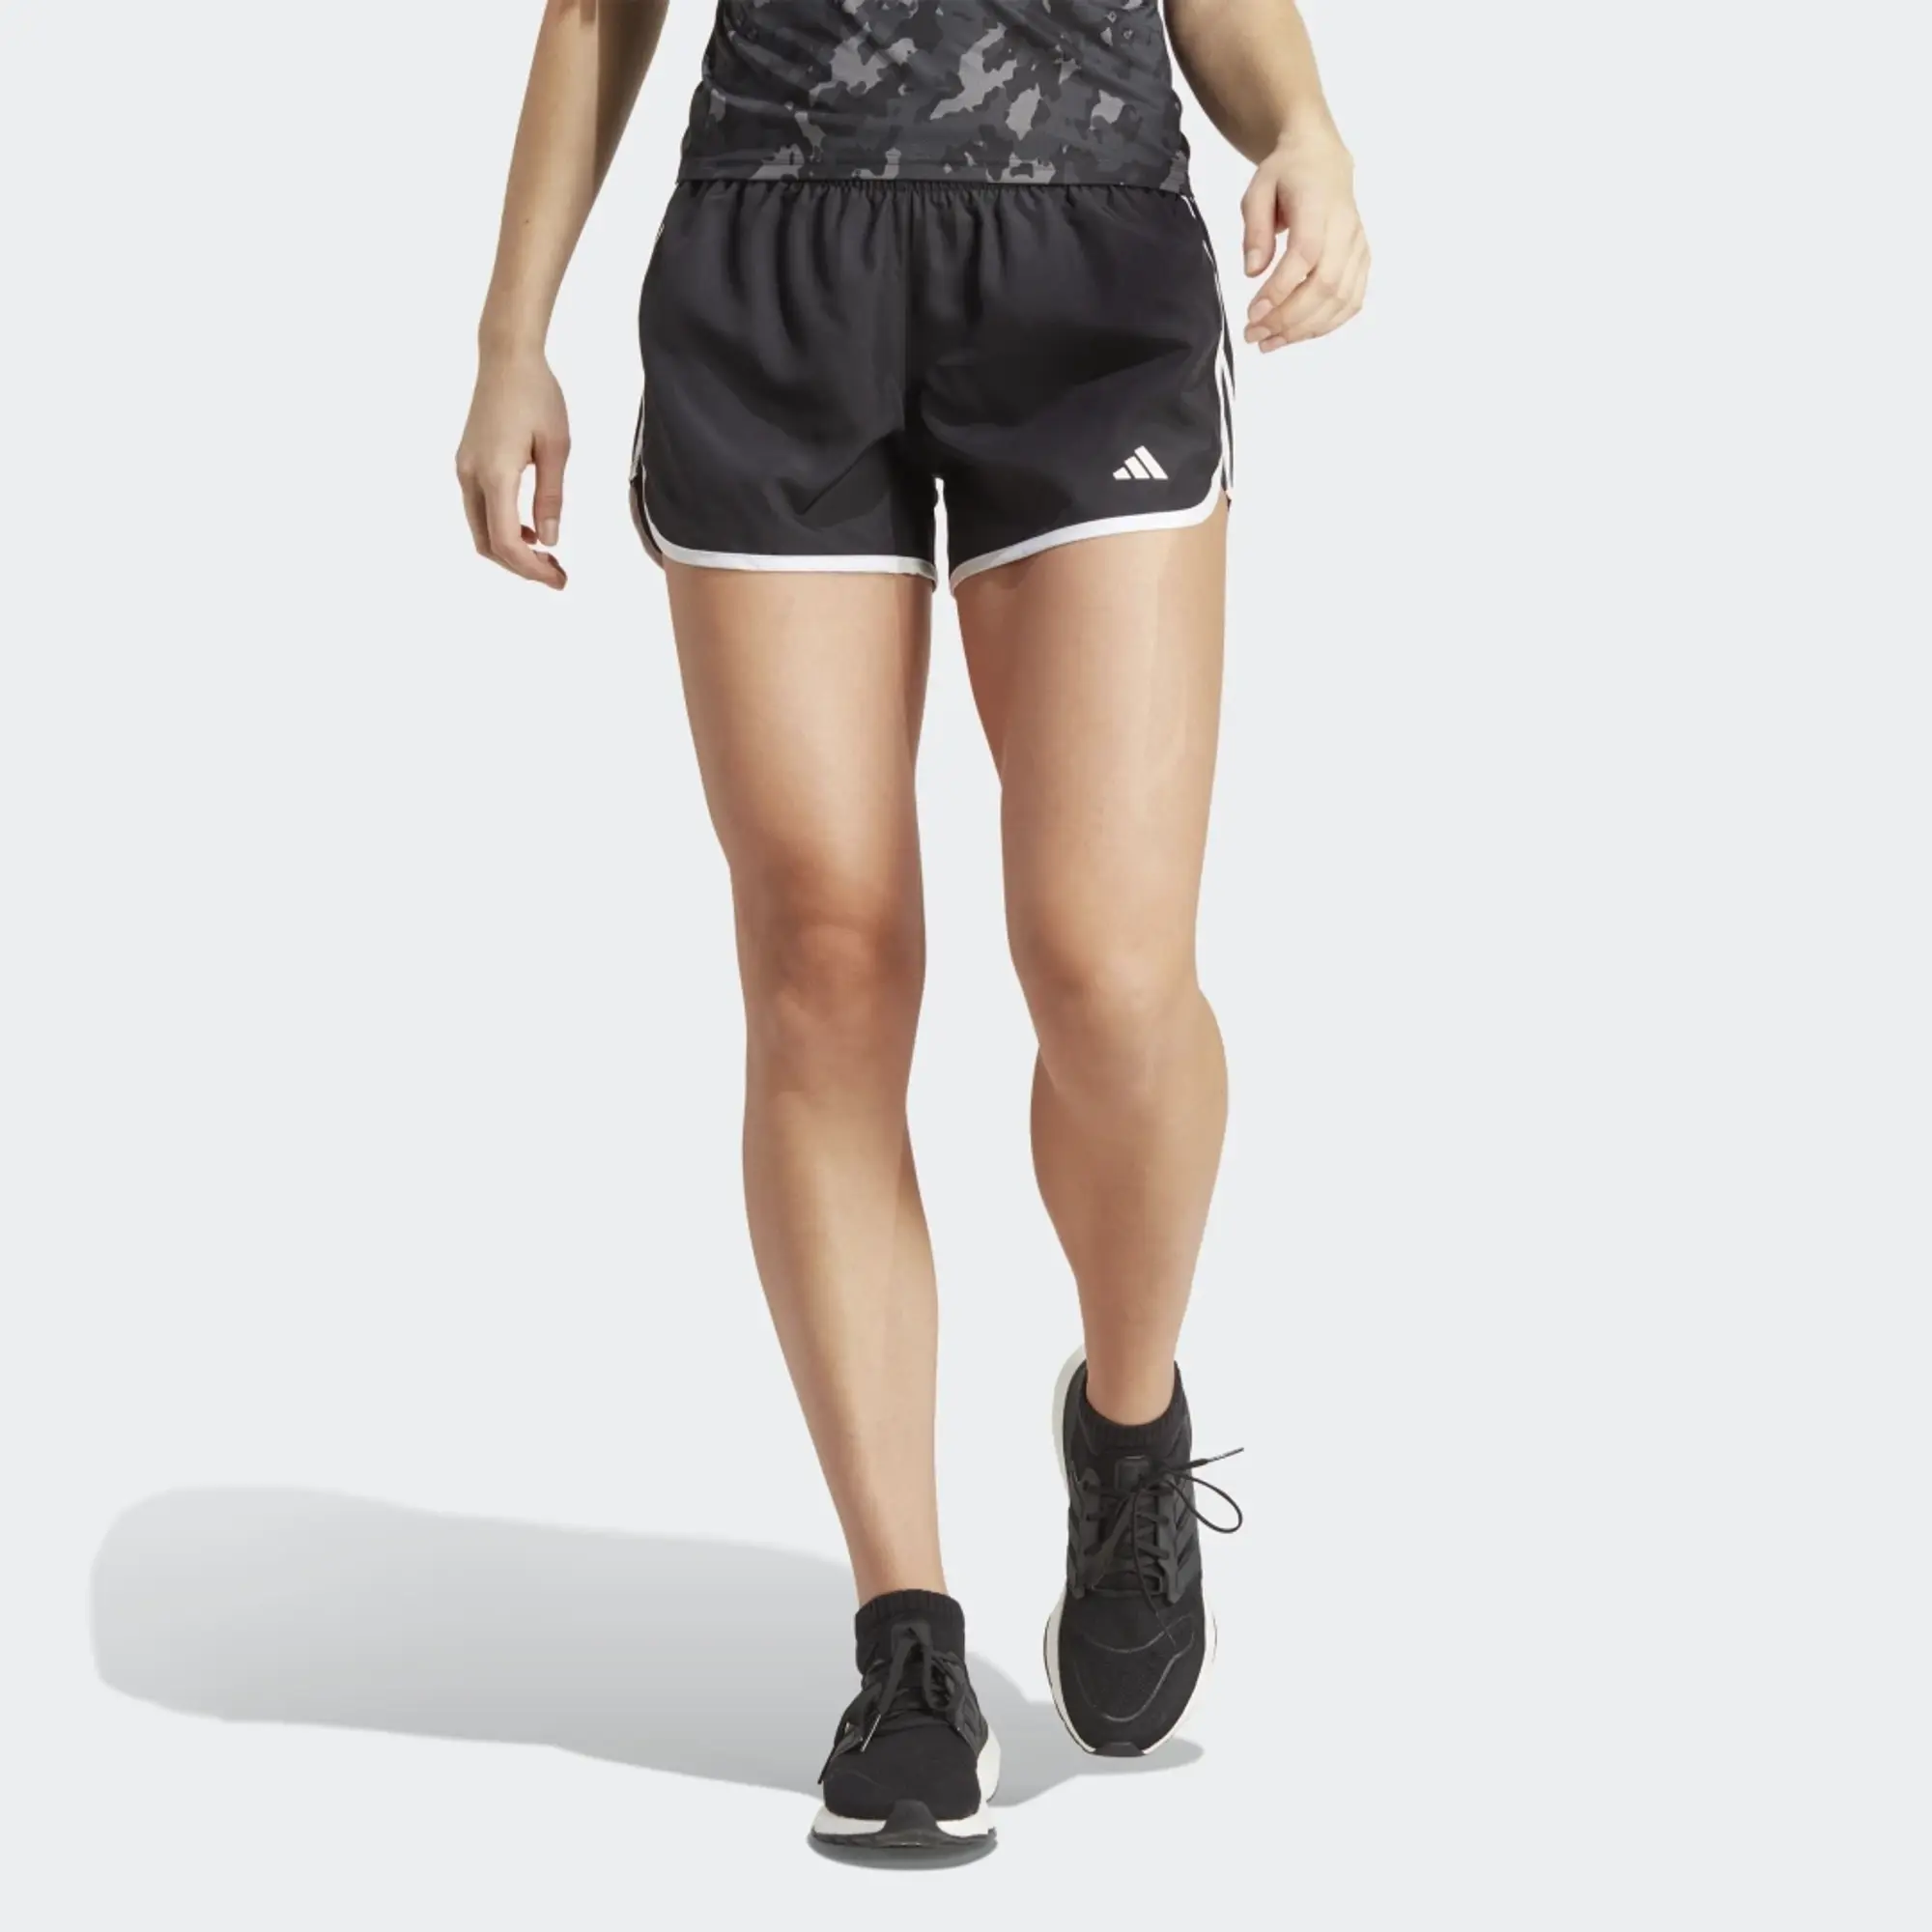 Nike Training Pro 365 Dri-FIT 3 inch booty shorts in grey